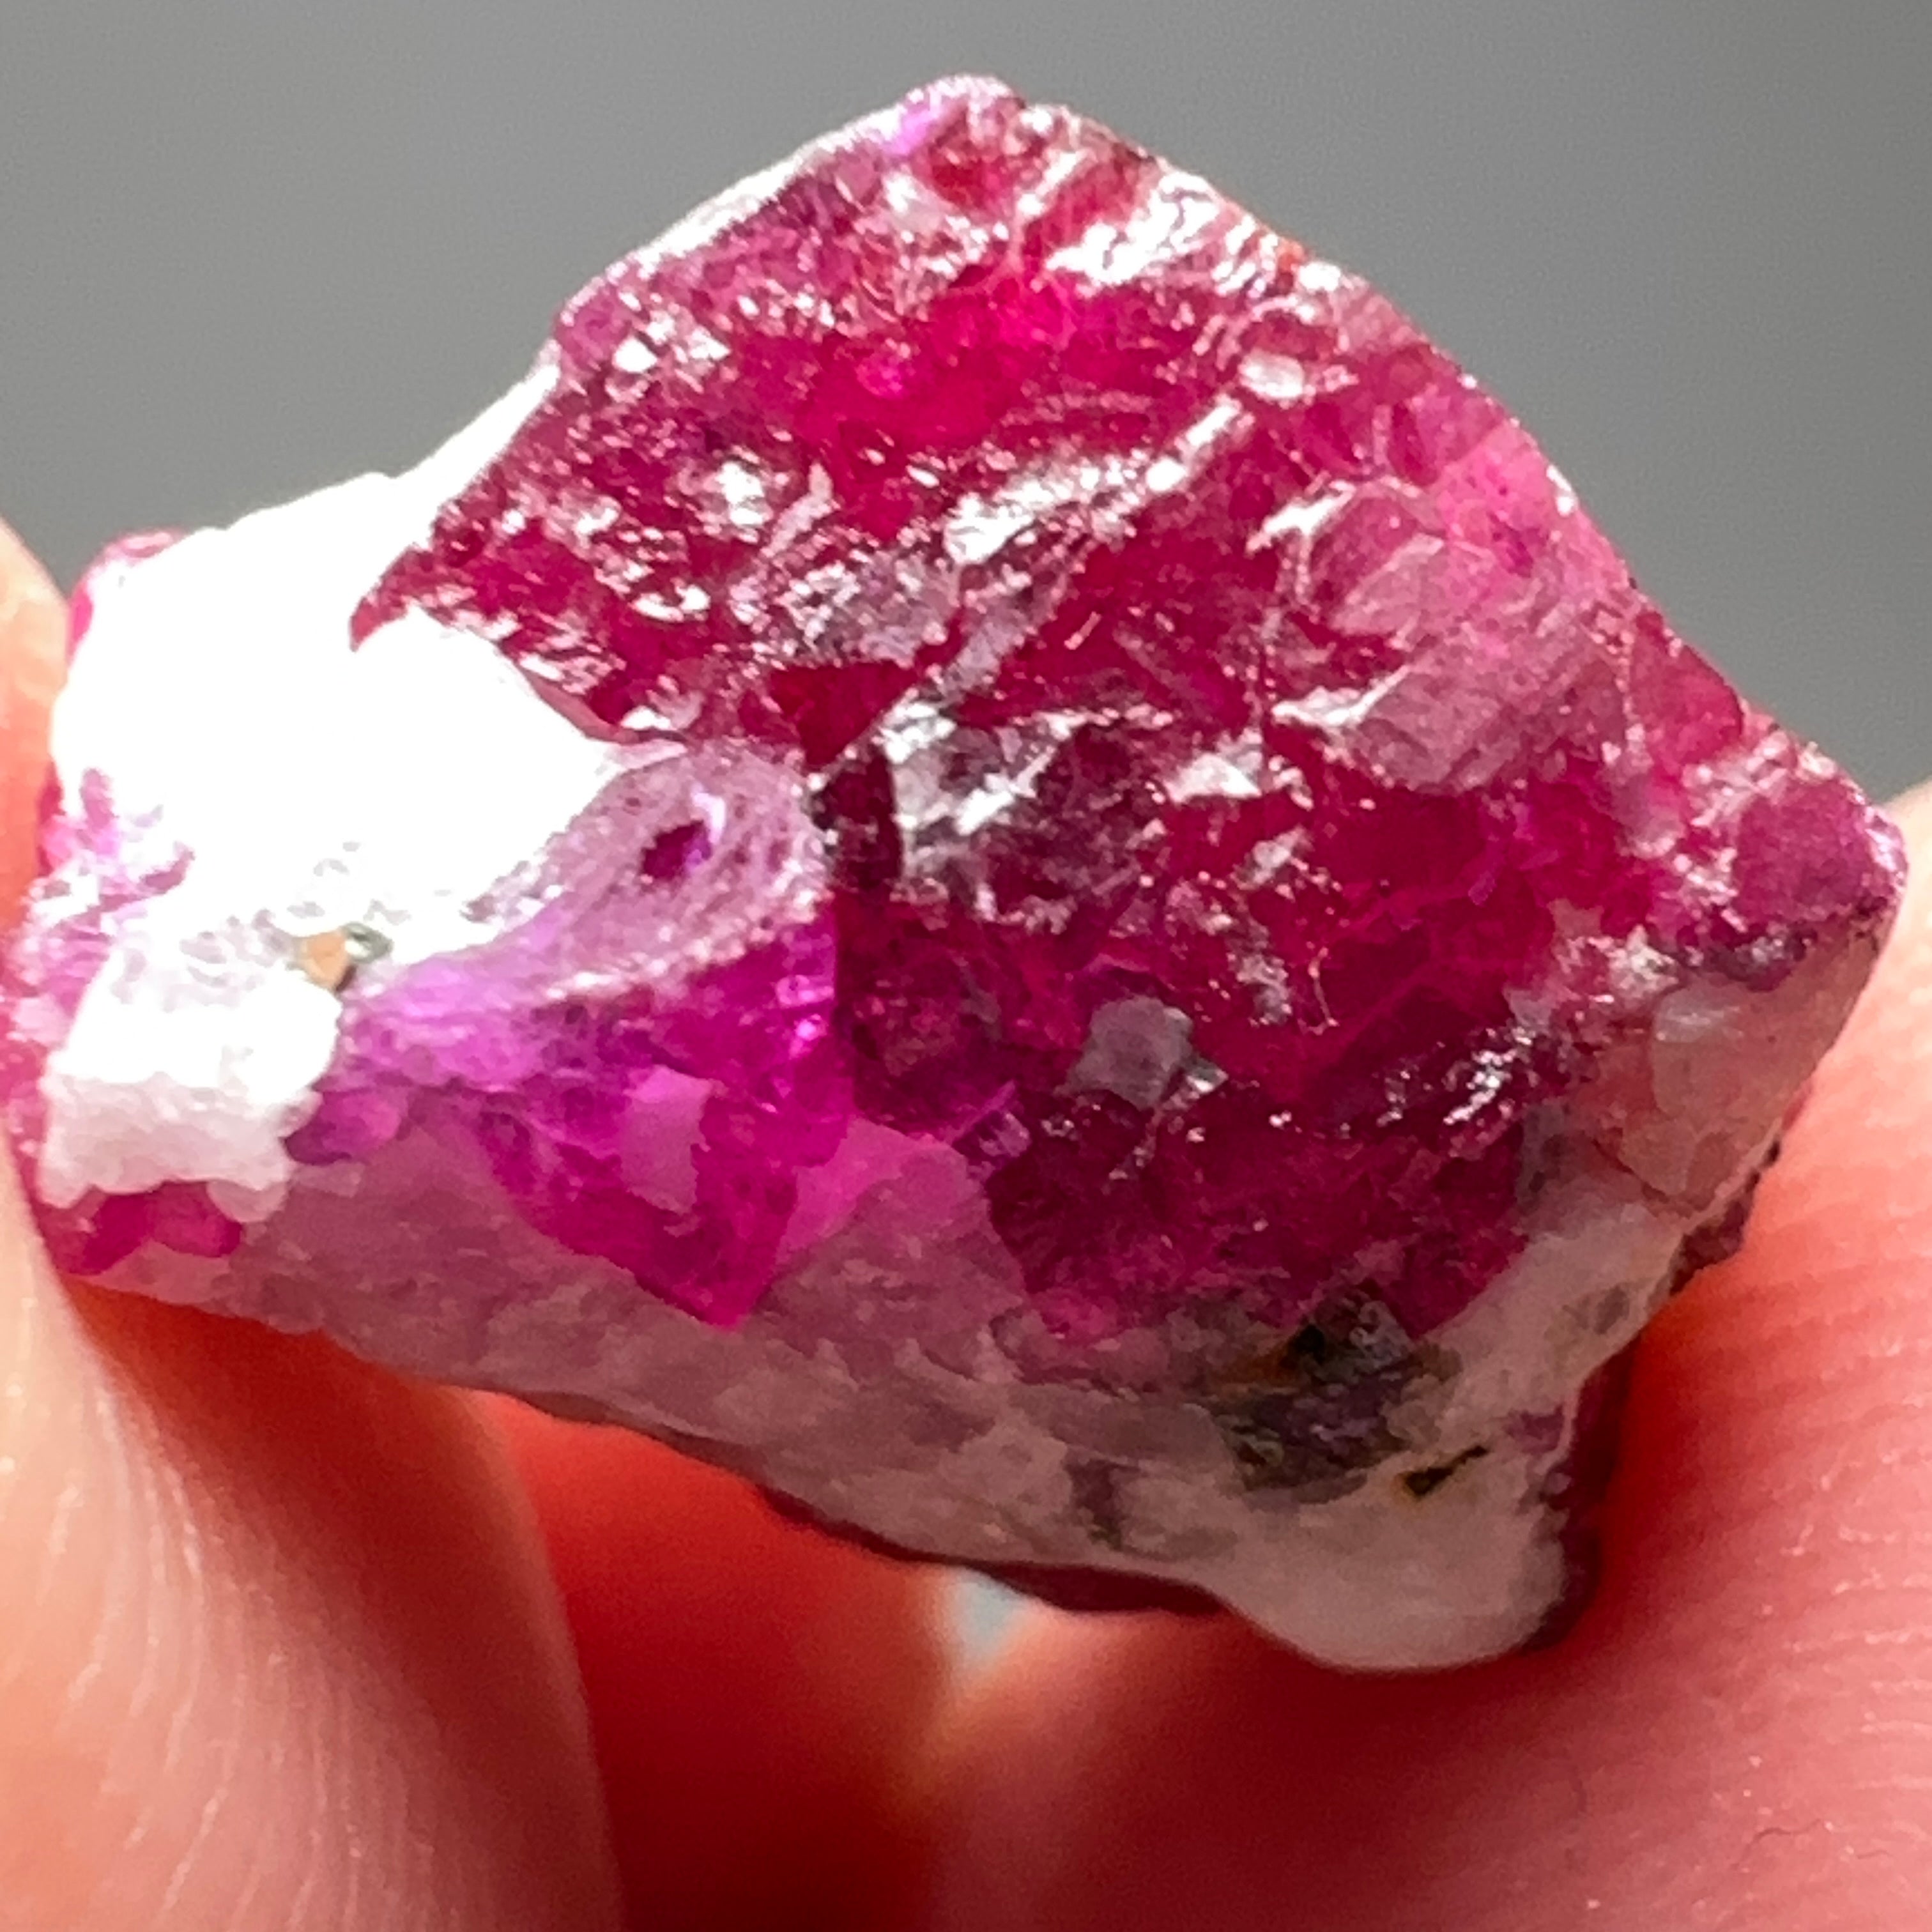 17.02ct Ruby on Matrix crystal with Pyrite, West Pokot, Kenya, Untreated Unheated. 1.53 x 1.28 x 0.93cm